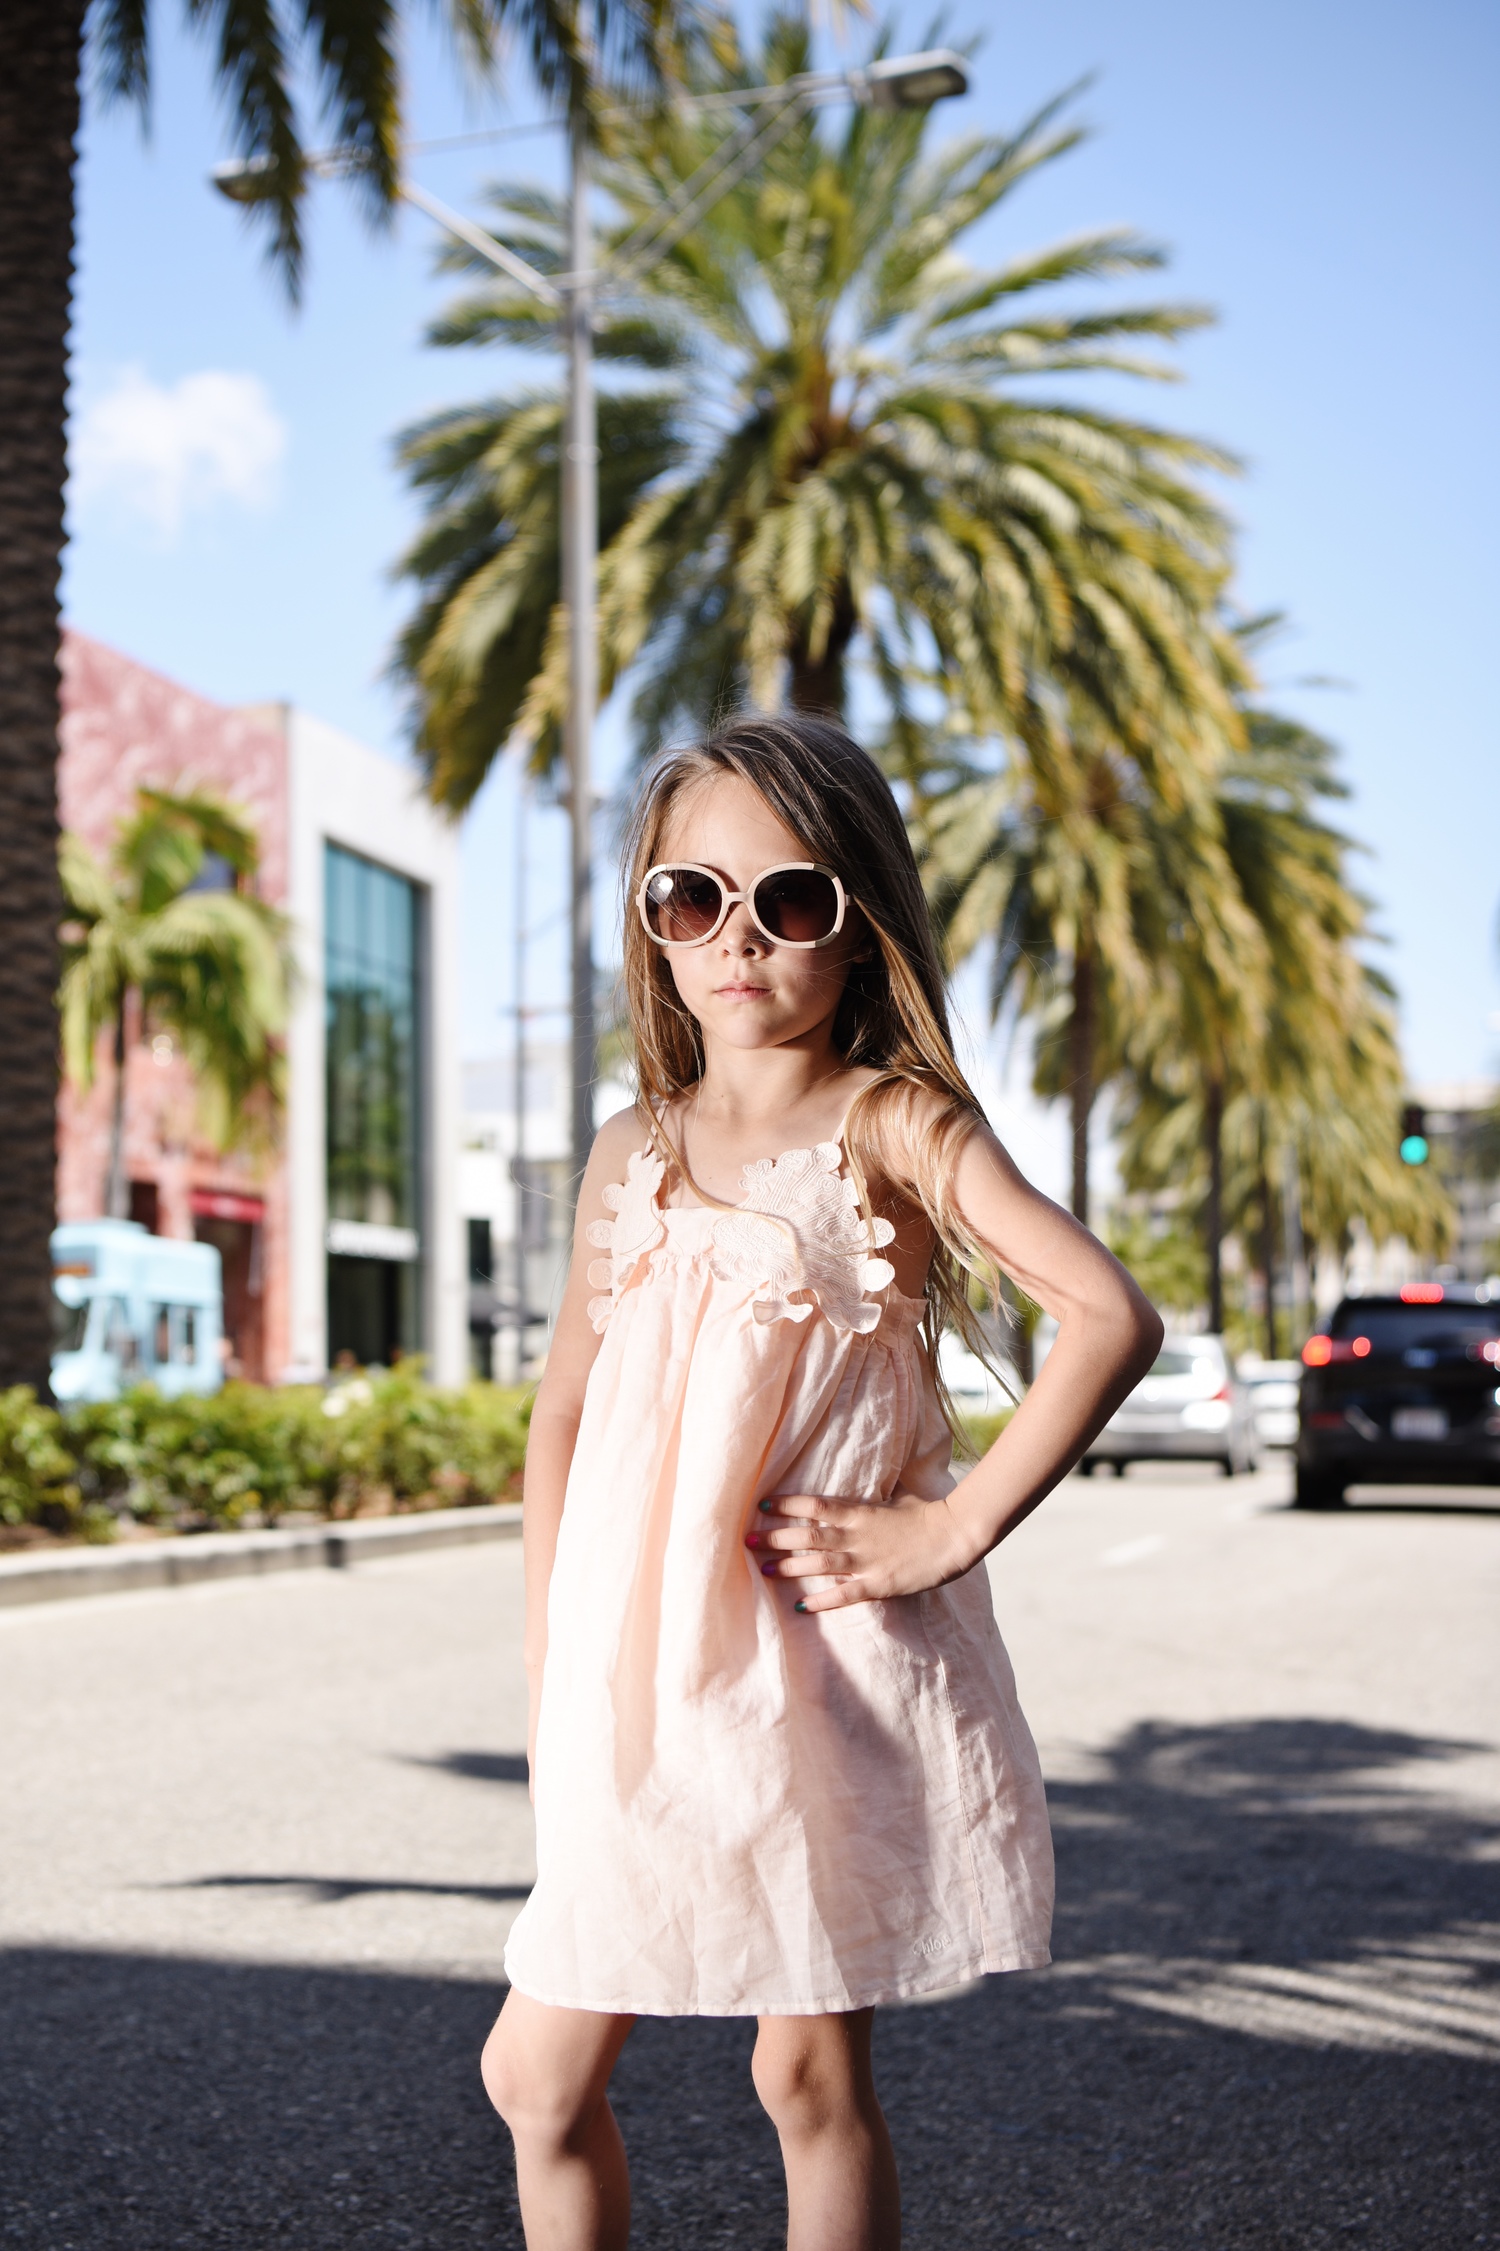 Enfant+Street+Style+by+Gina+Kim+Photography+Chloe+girls.jpeg